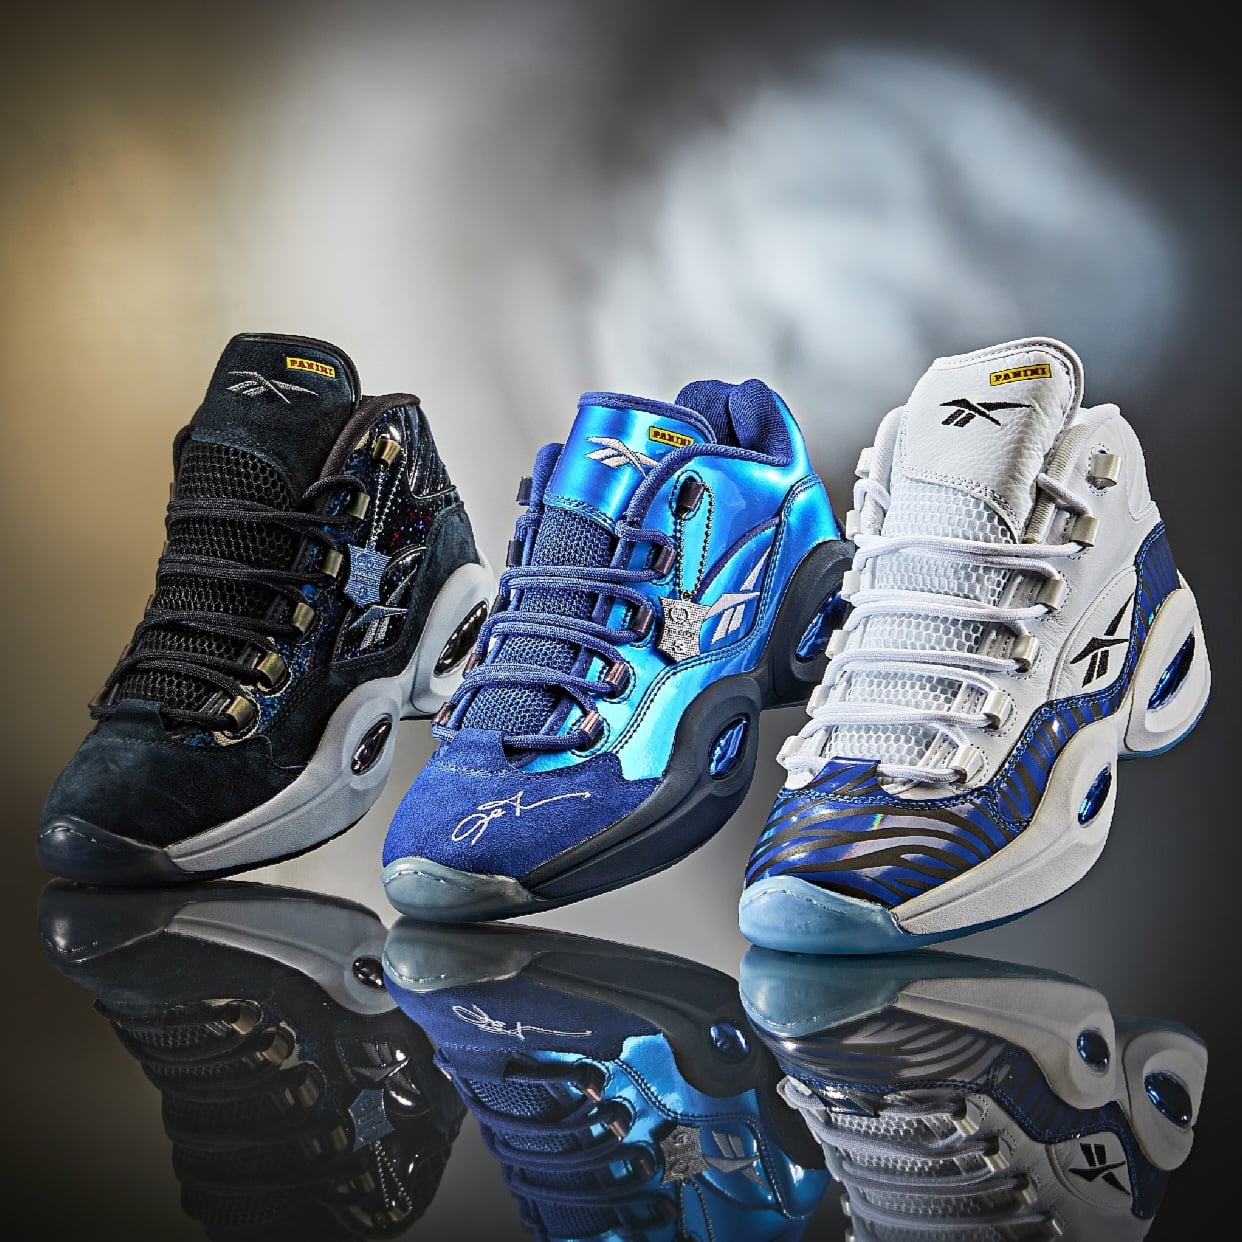 Reebok, Panini, Allen Iverson’s basketball shoe collaboration via 360 MAGAZINE.